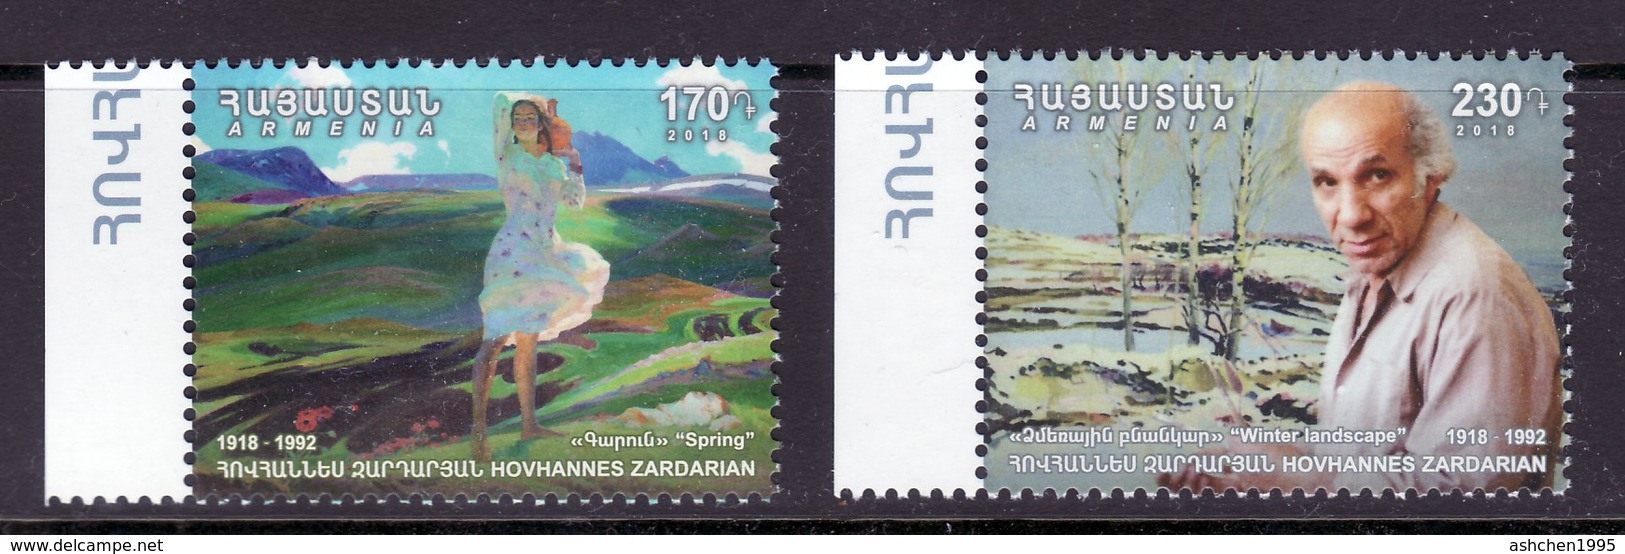 Armenien / Armenie / Armenia 2018, 100th Anniv. Of Hovhannes Zardaryan (1918-1982), Painter - MNH - Armenia